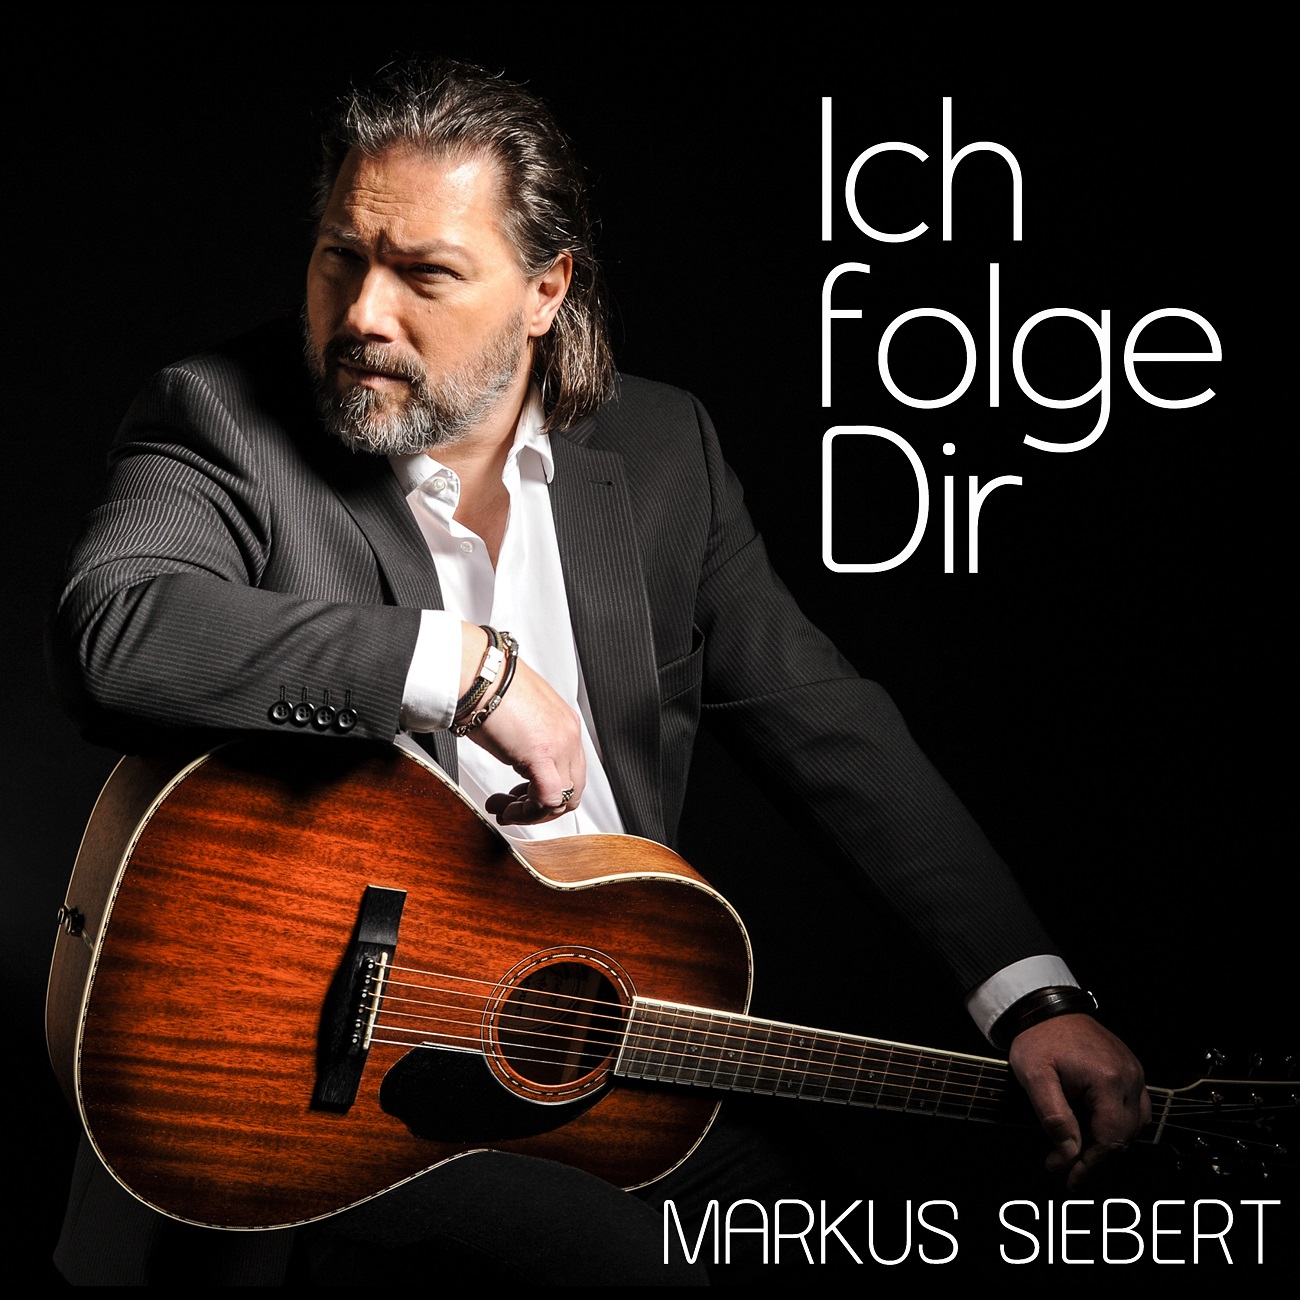 Markus Siebert - Ich folge Dir - Cover.jpg